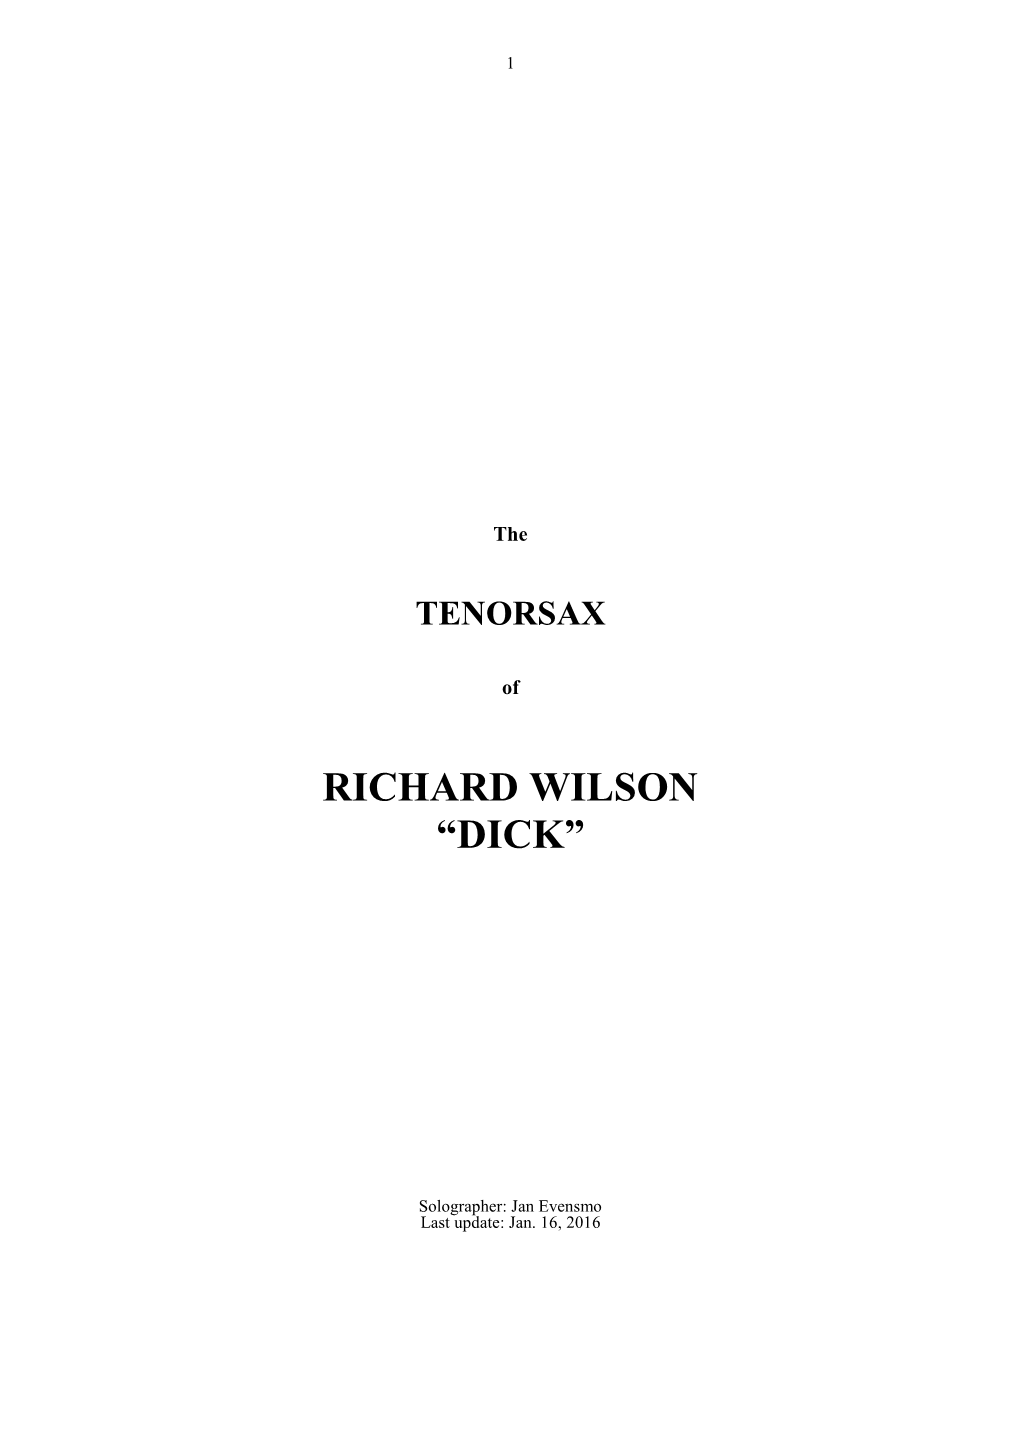 Richard Wilson “Dick”